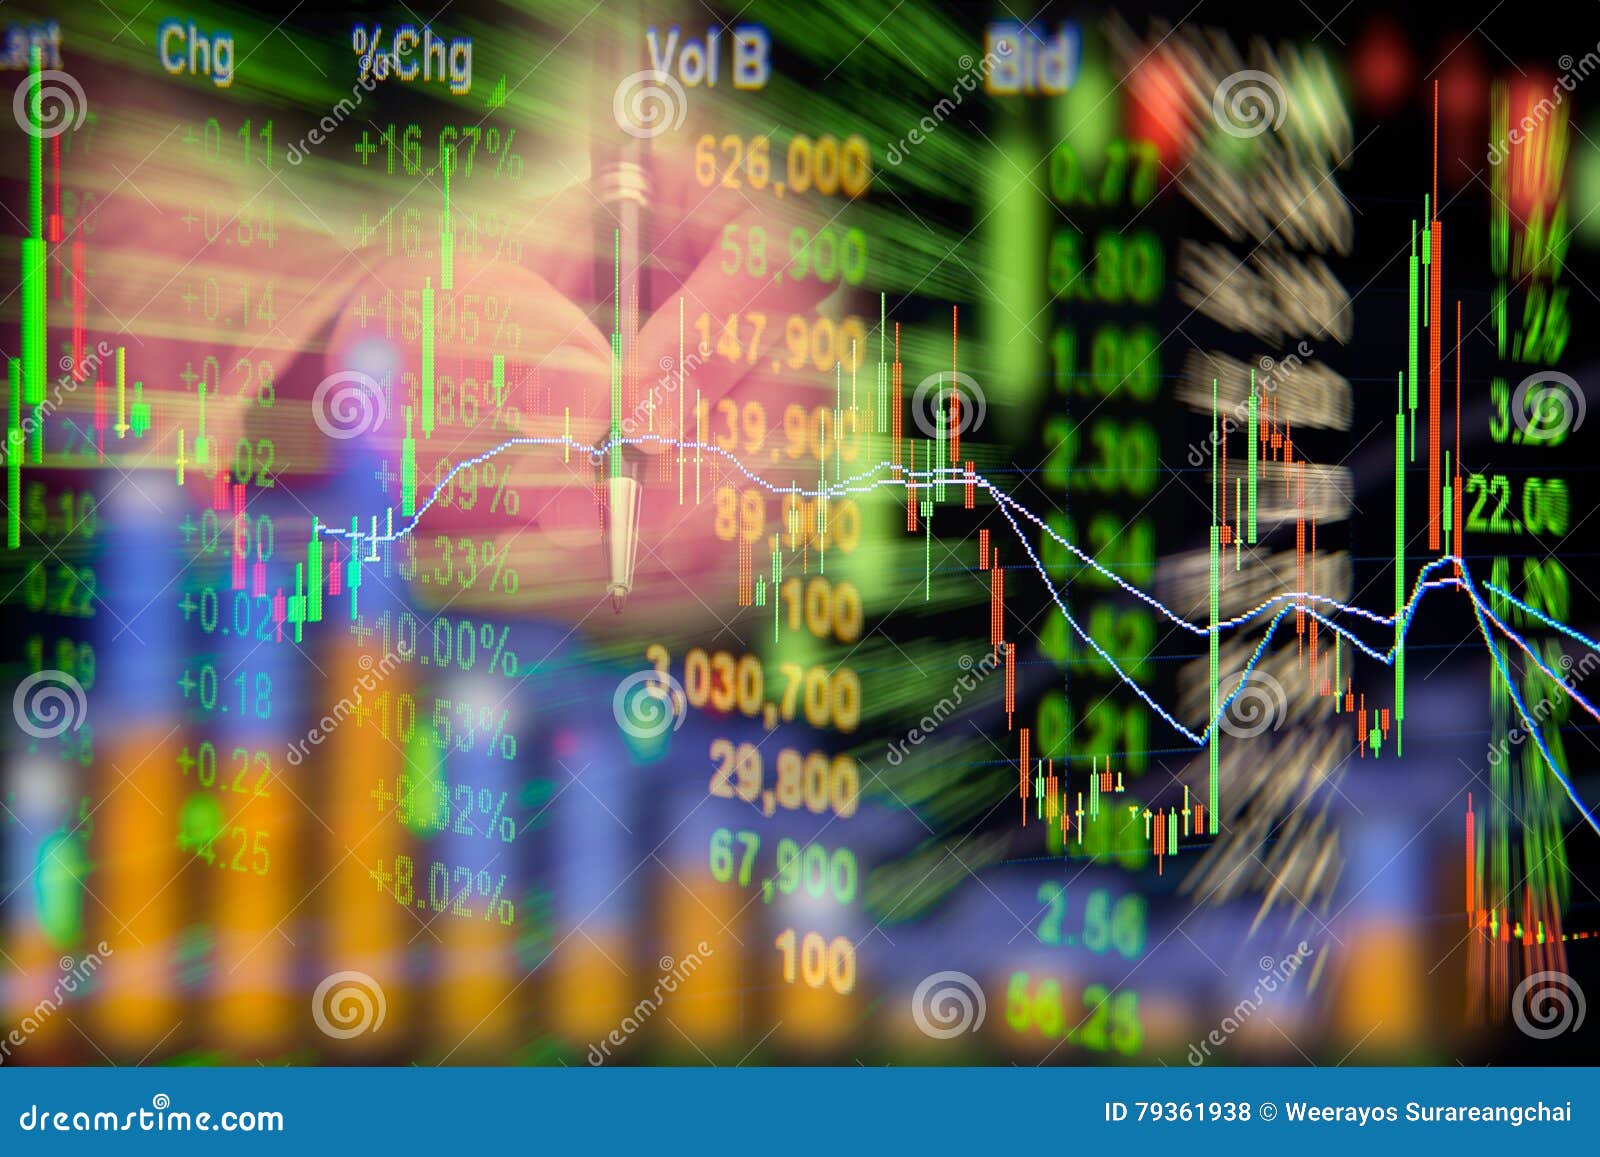 stock exchange graph background.